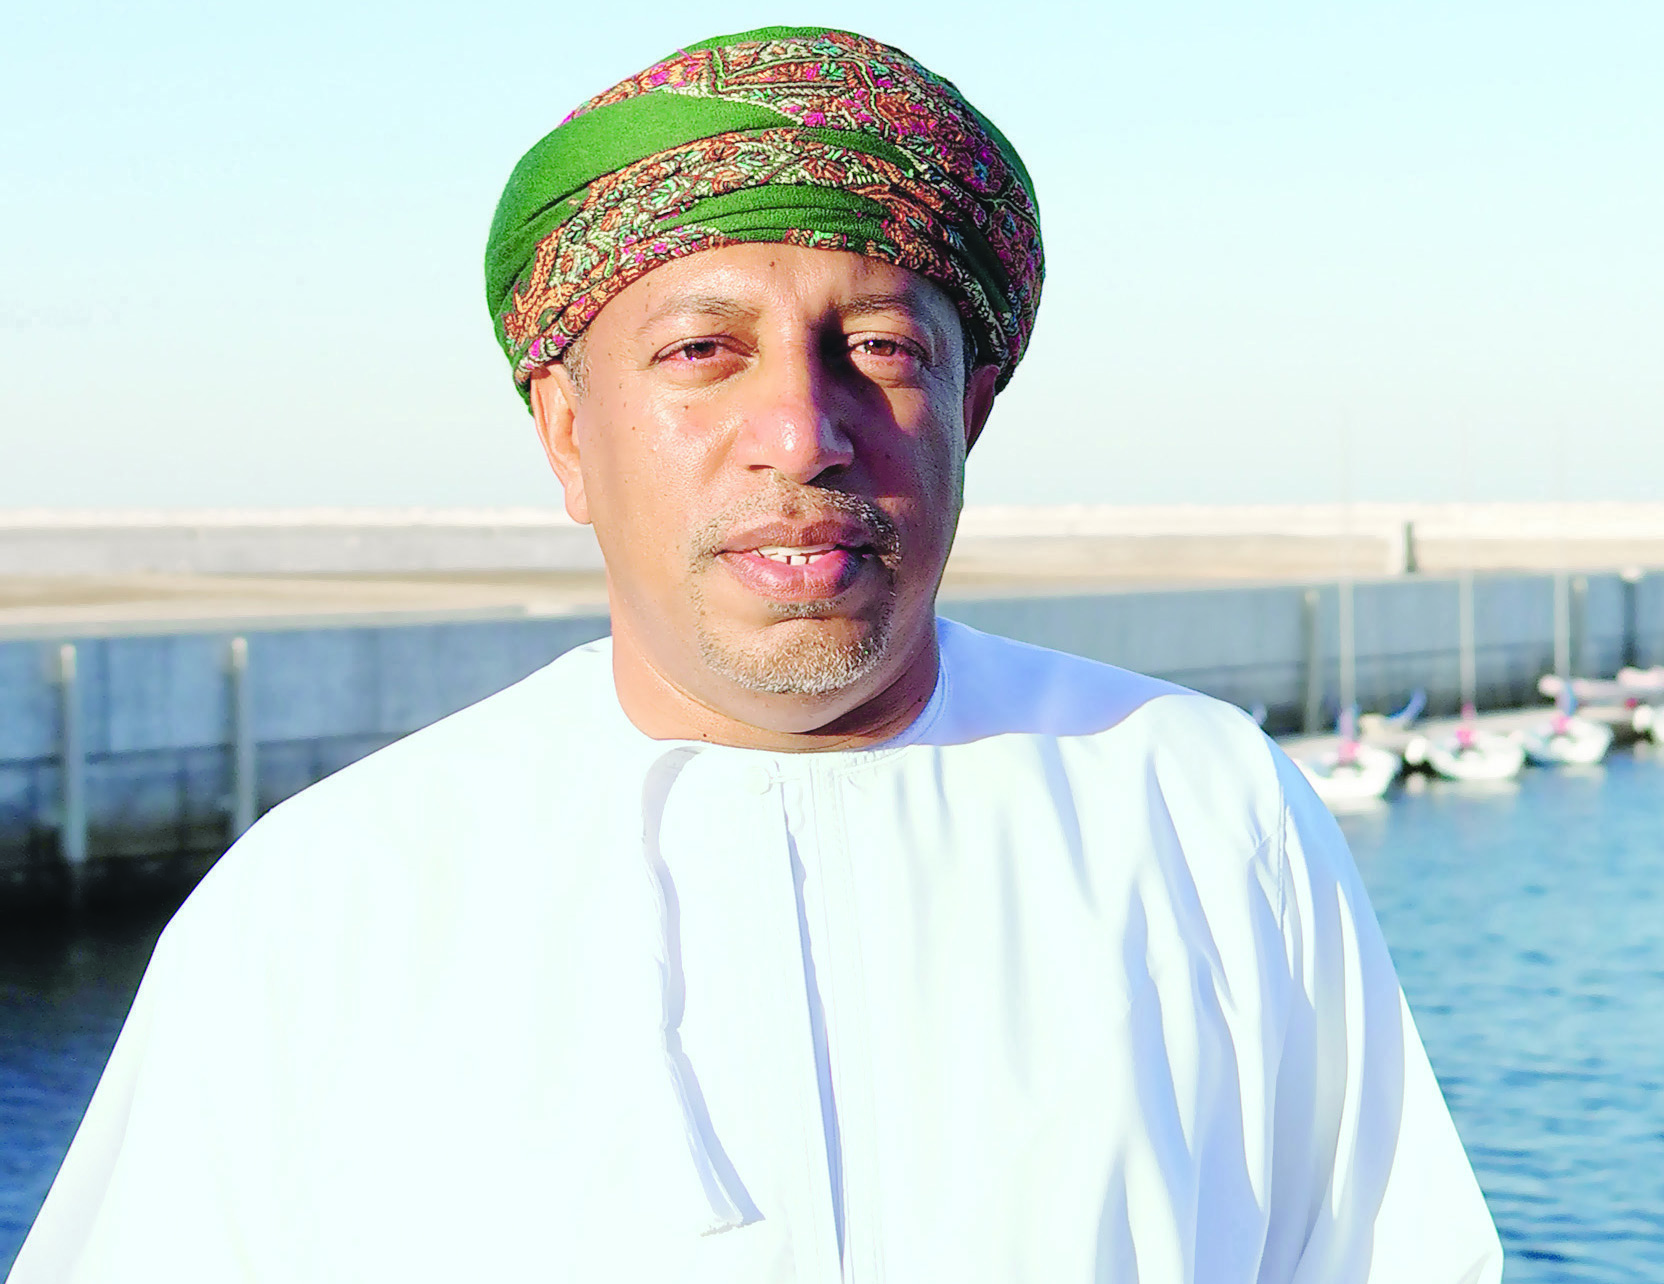 If elected, Rashid Al Kindi and team hope to raise profile of Oman athletics